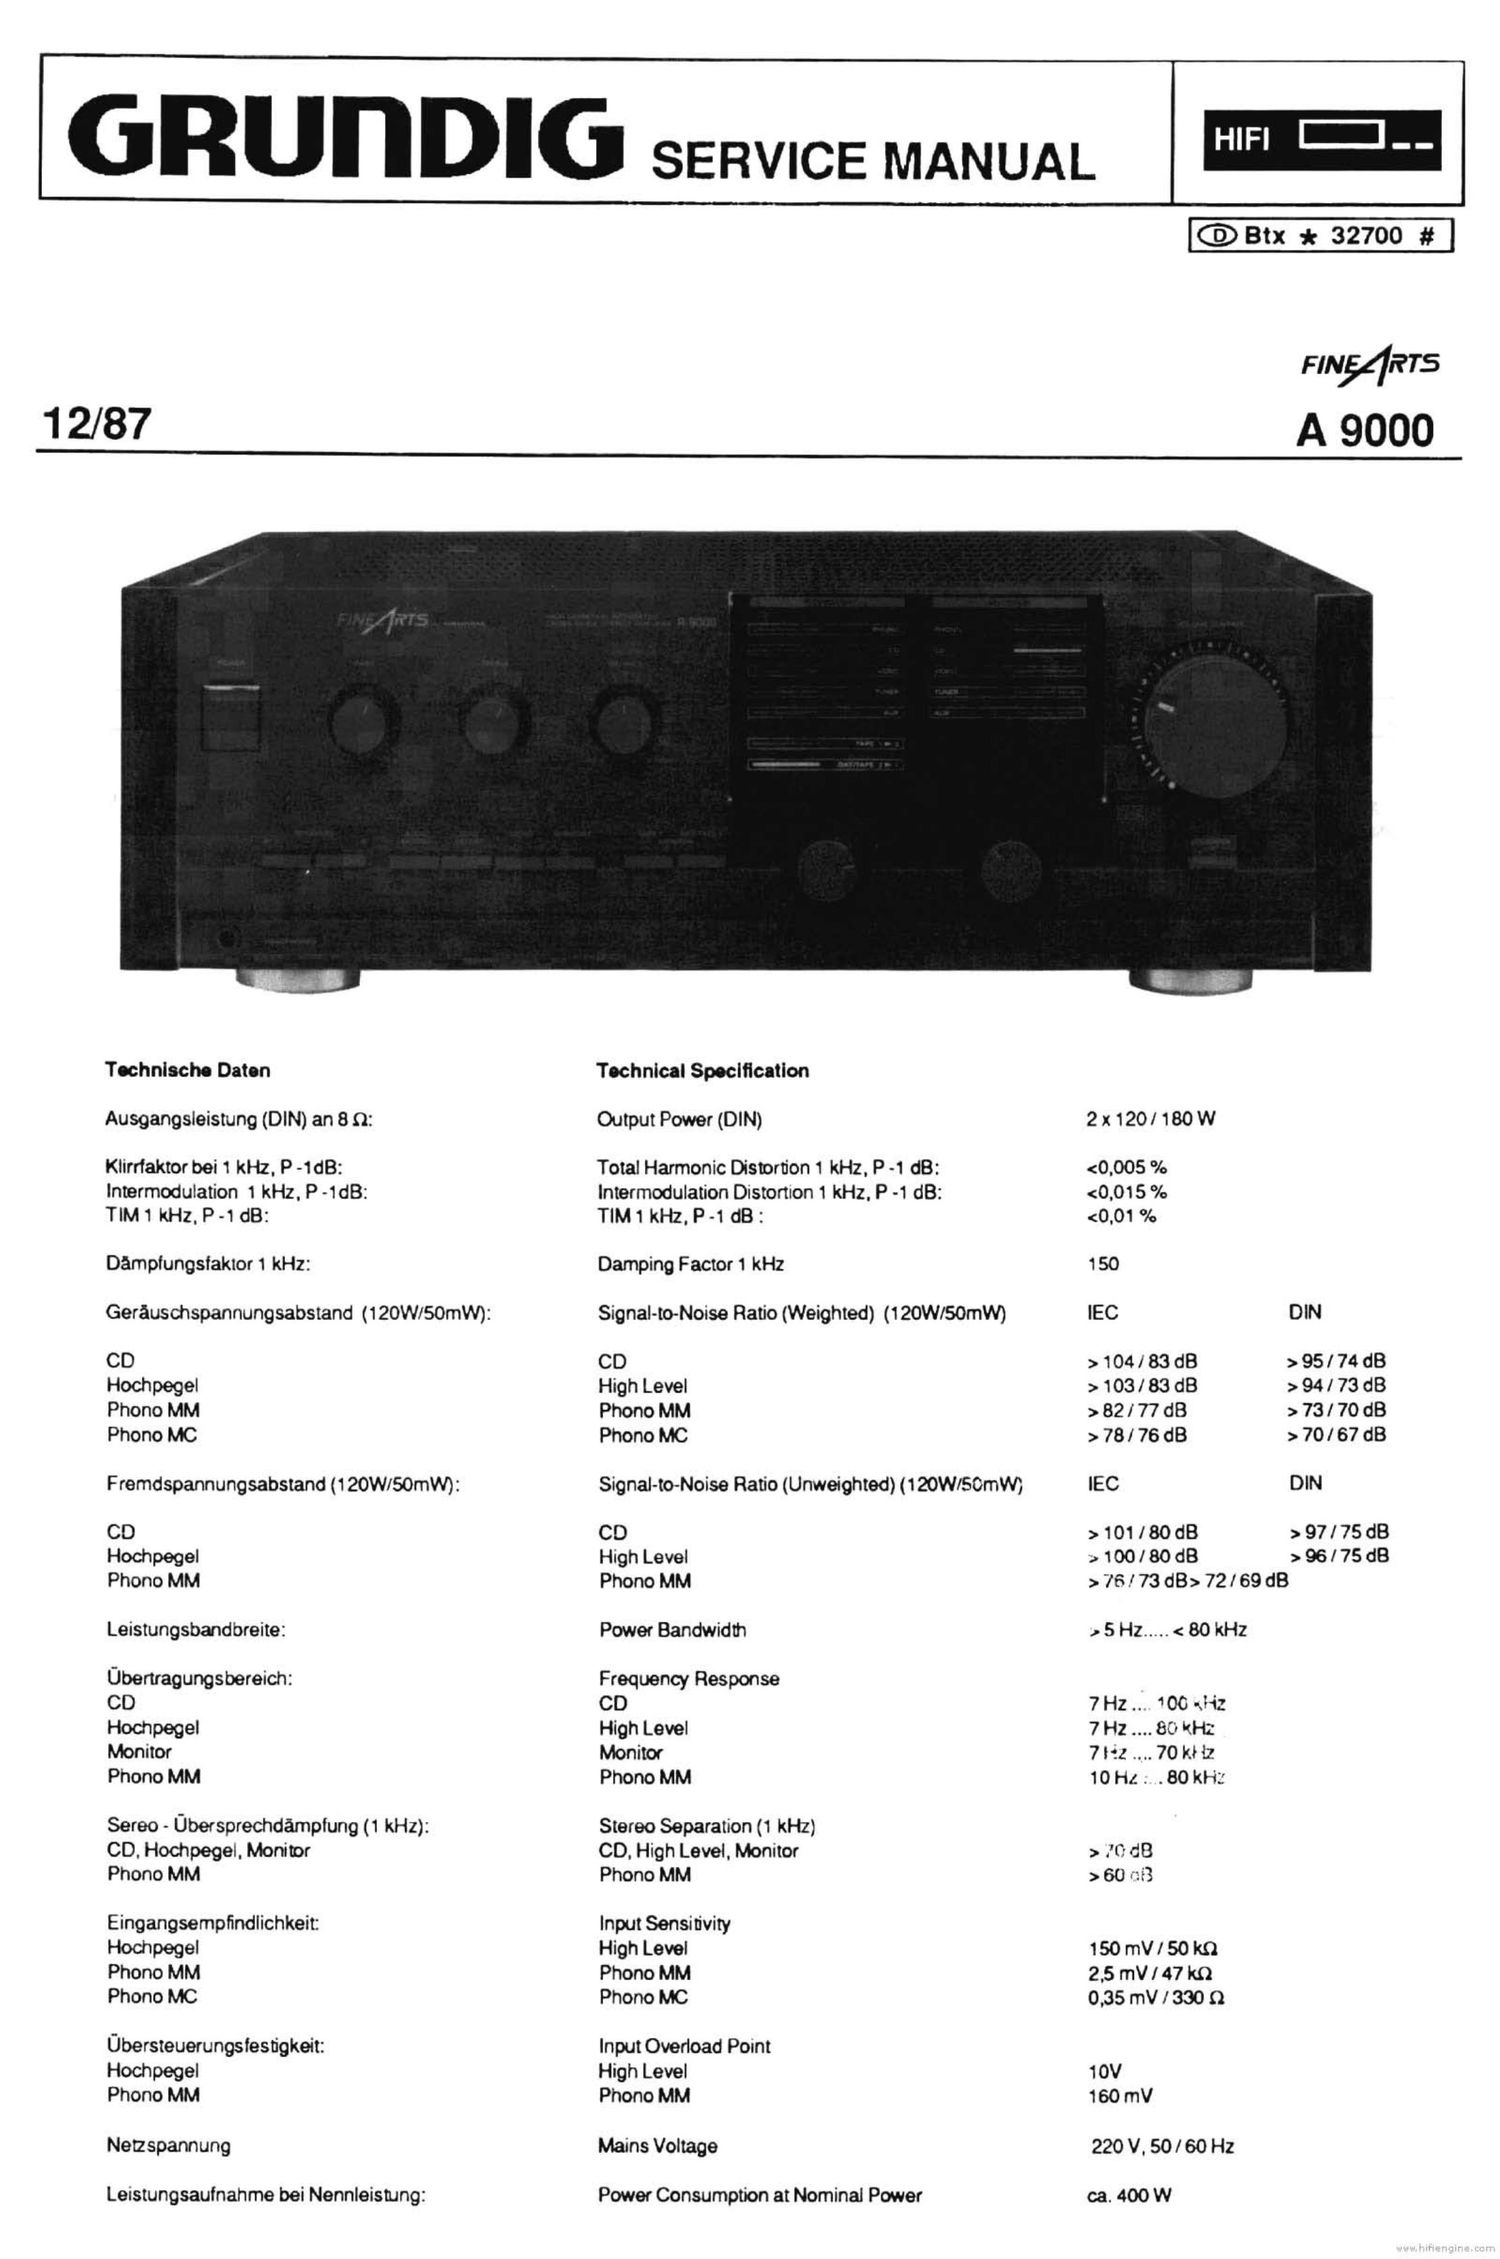 Grundig A 9000 Service Manual